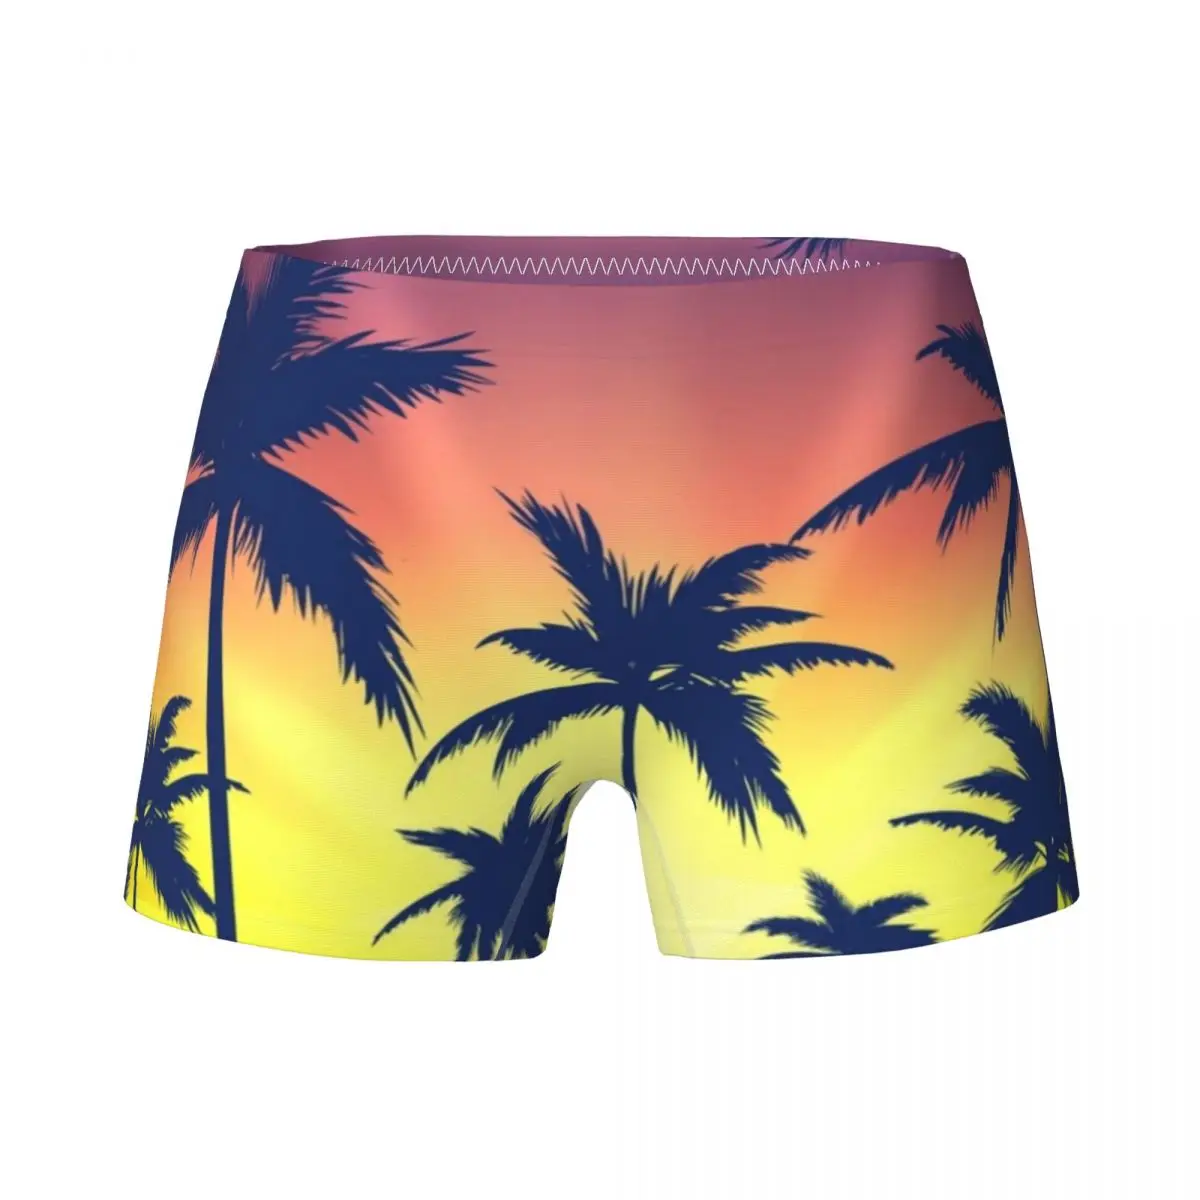 

Sunset Palm Trees Pattern Children's Girls Underwear Kids Cute Boxers Briefs Soft Cotton Teenagers Panties Underpants 4-15Y